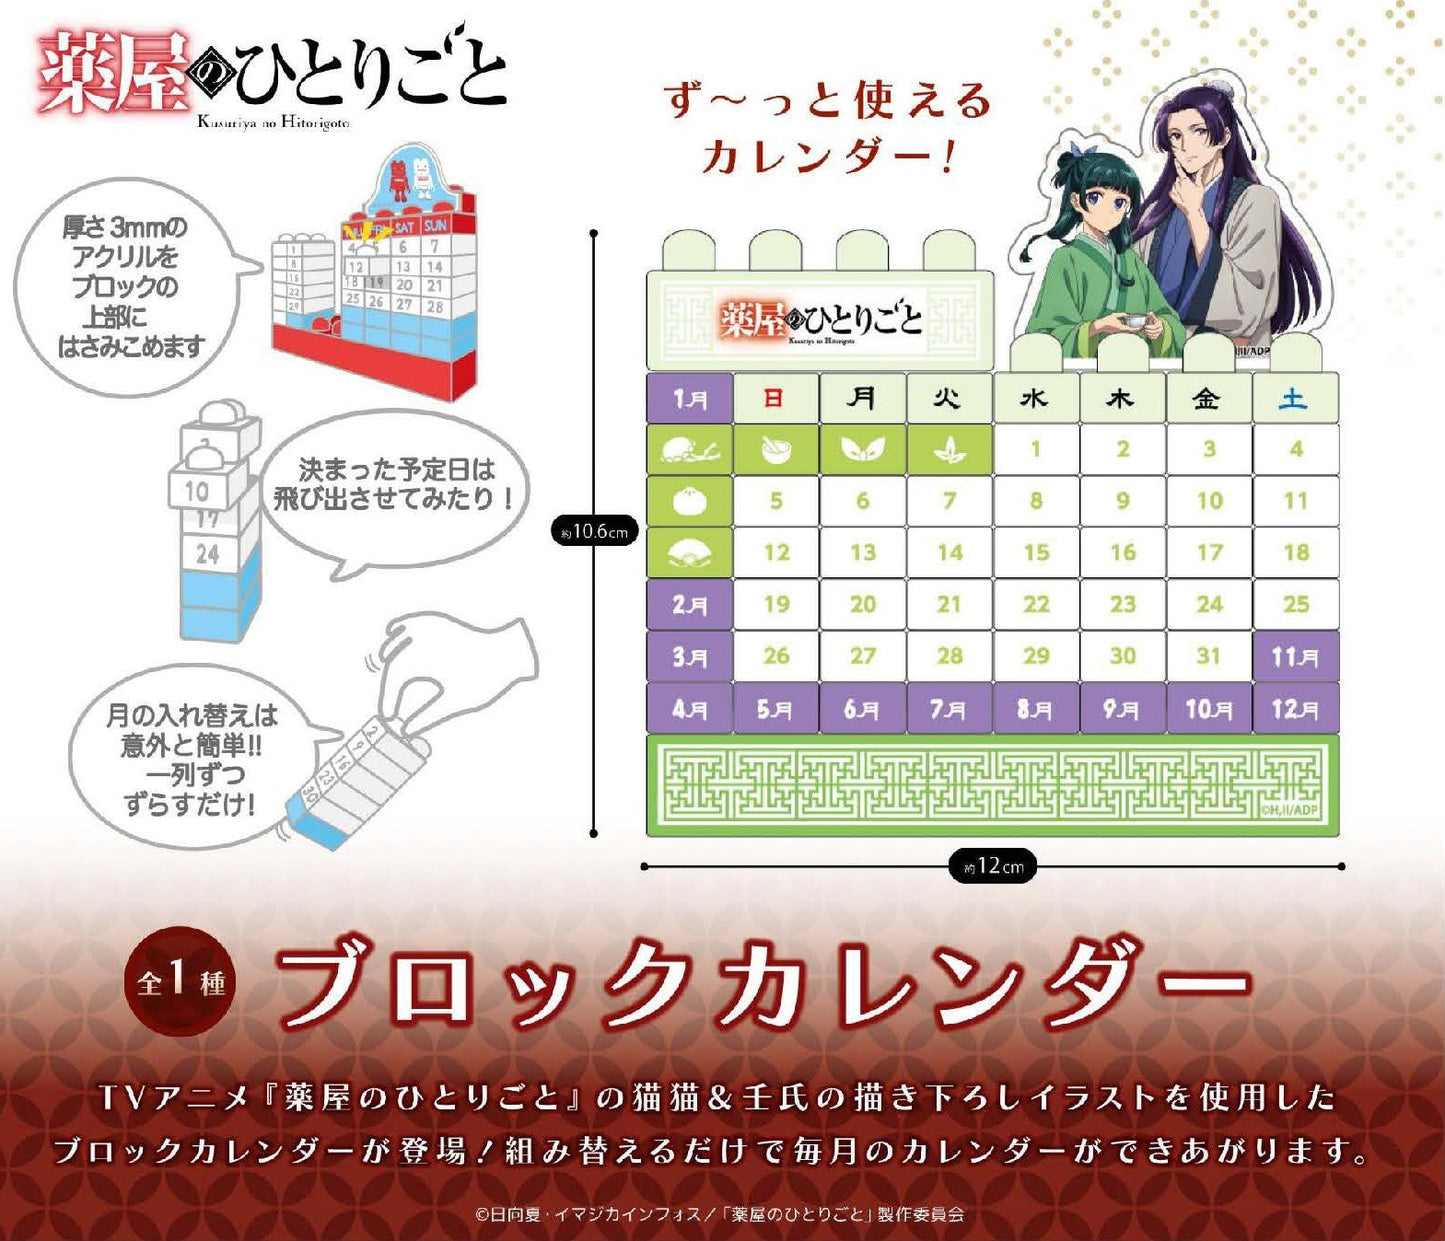 Culture Entertainment - The Apothecary Diaries: Block Calendar - Good Game Anime